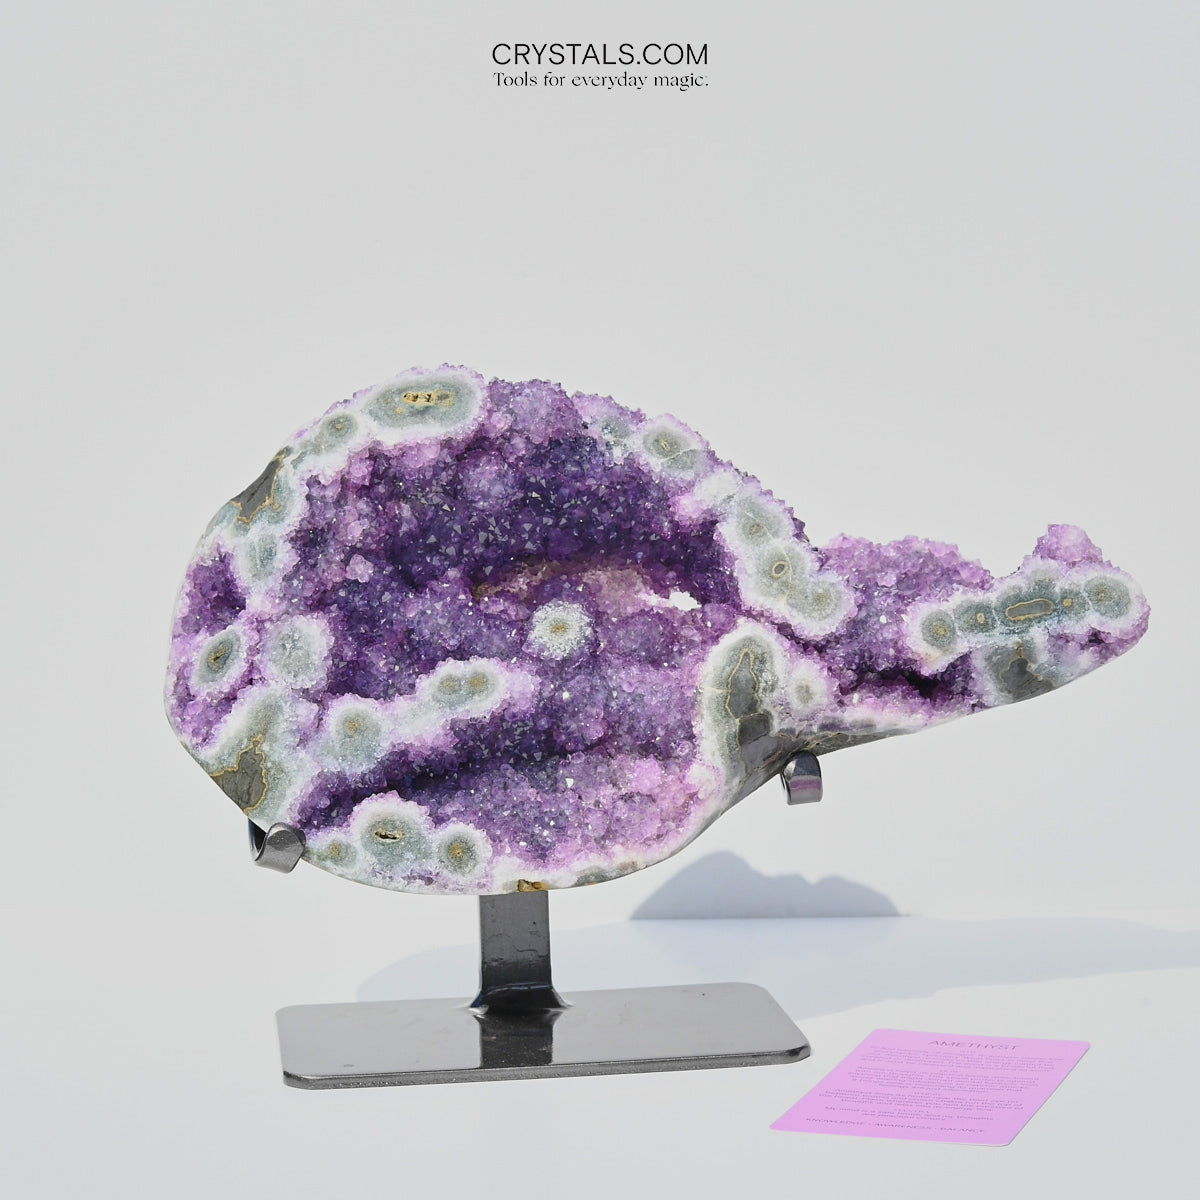 amethyst geode crystals